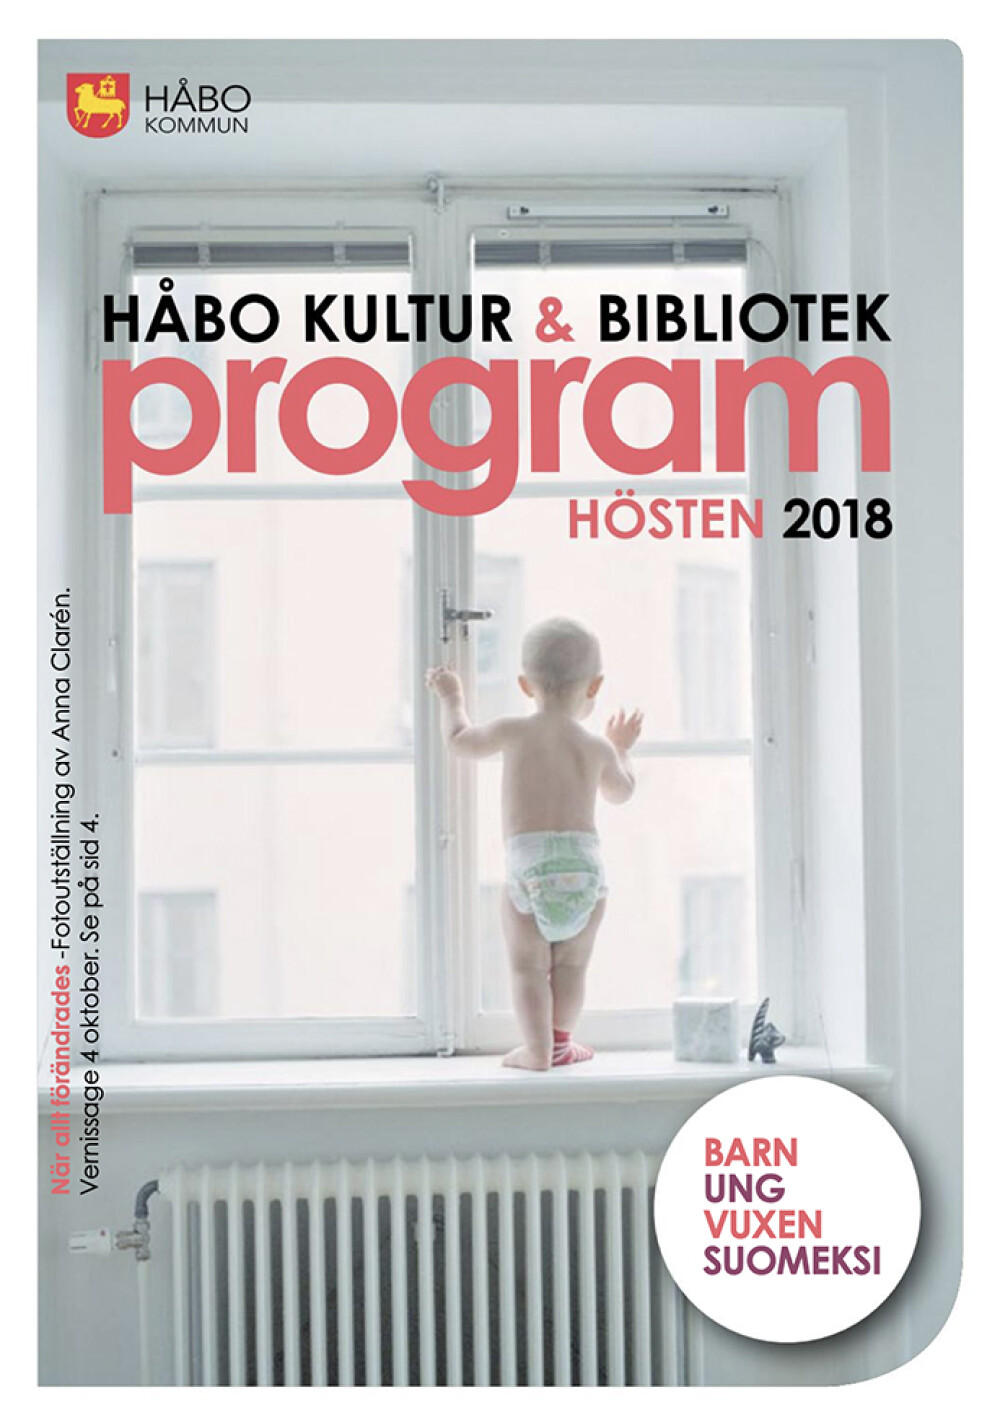 Håbo kommun, 2018